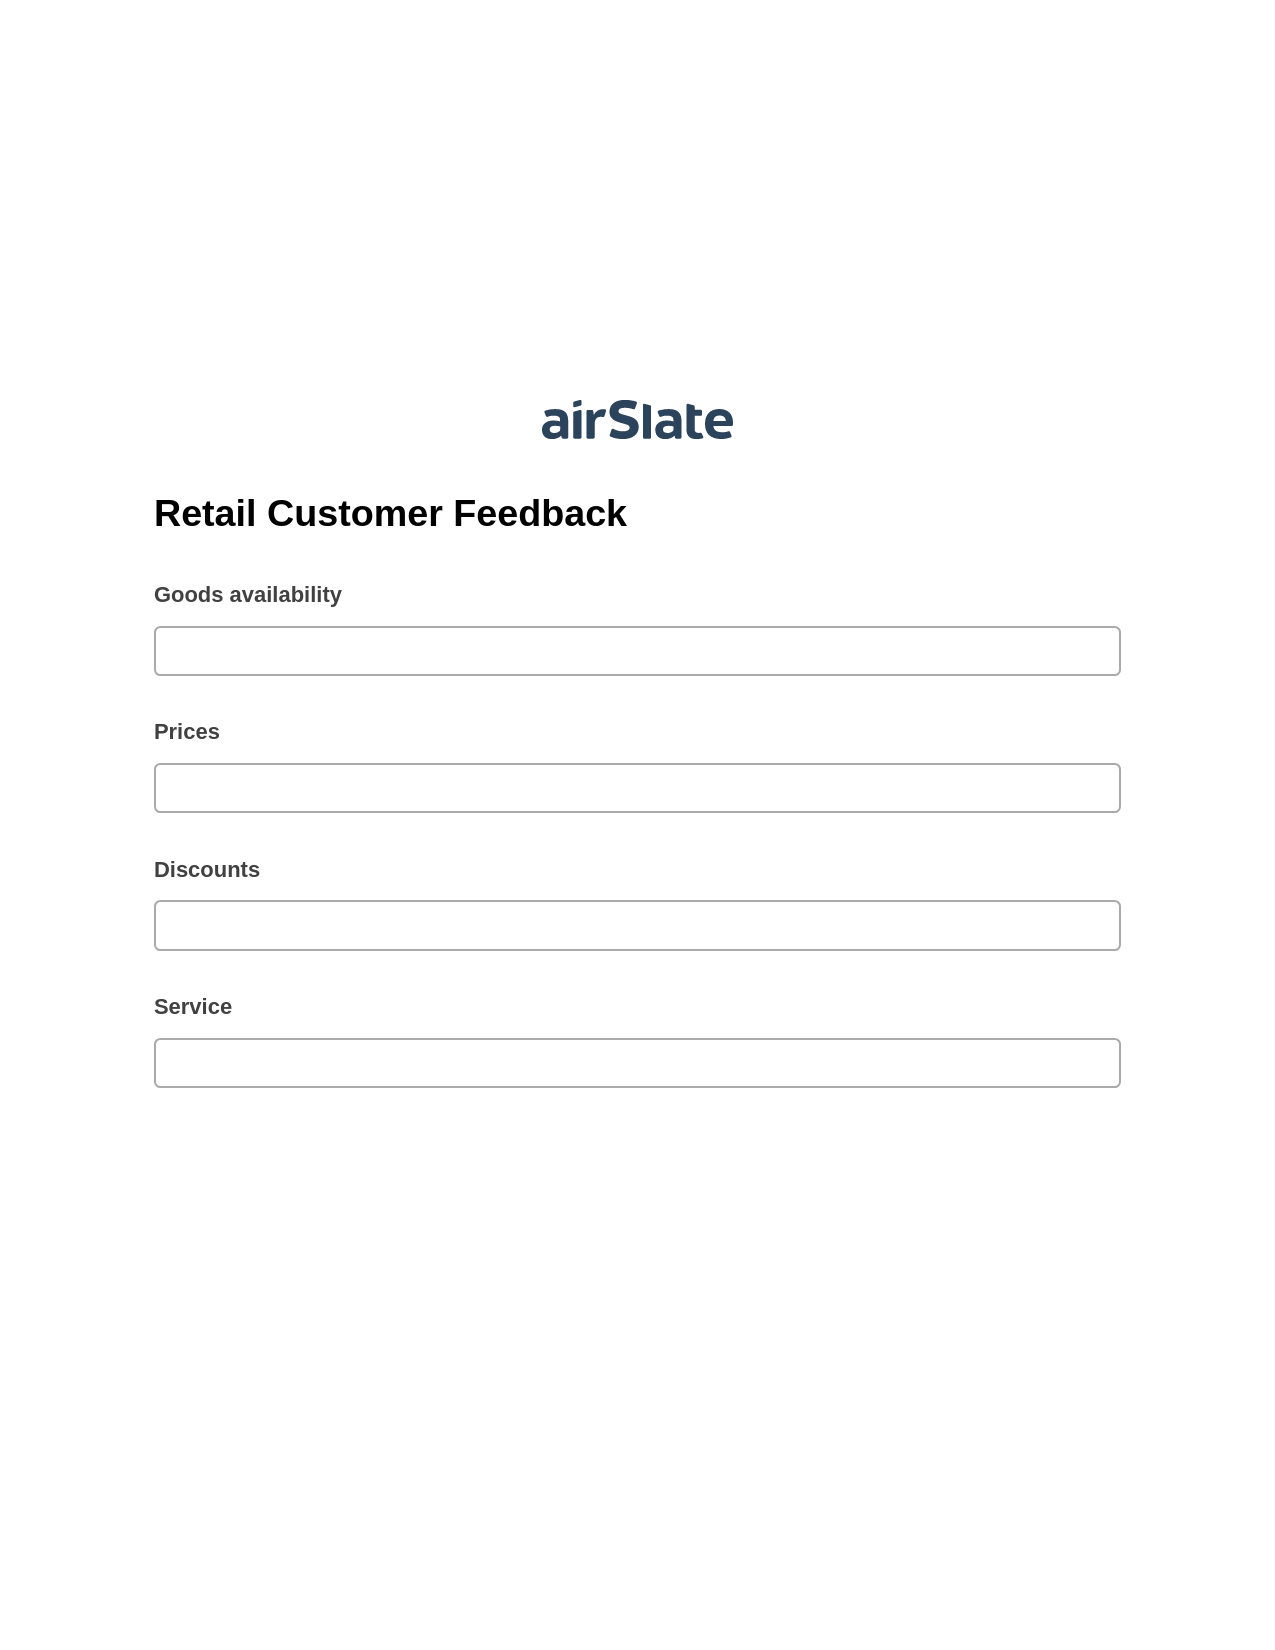 Multirole Retail Customer Feedback Pre-fill from CSV File Bot, Roles Reminder Bot, Box Bot